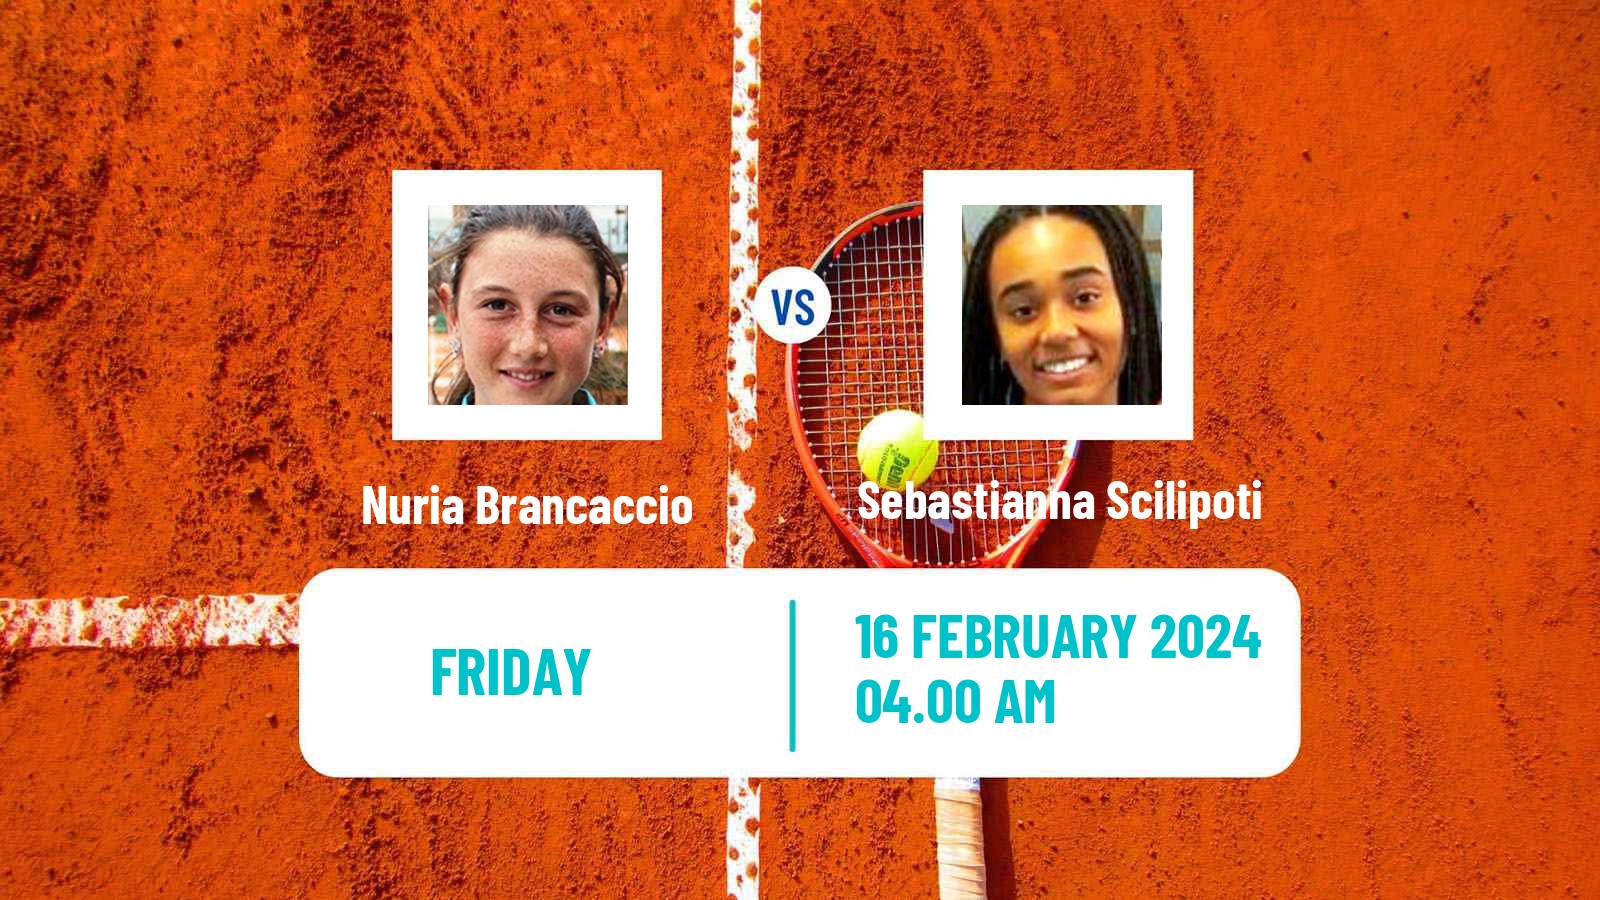 Tennis ITF W35 Antalya 3 Women Nuria Brancaccio - Sebastianna Scilipoti